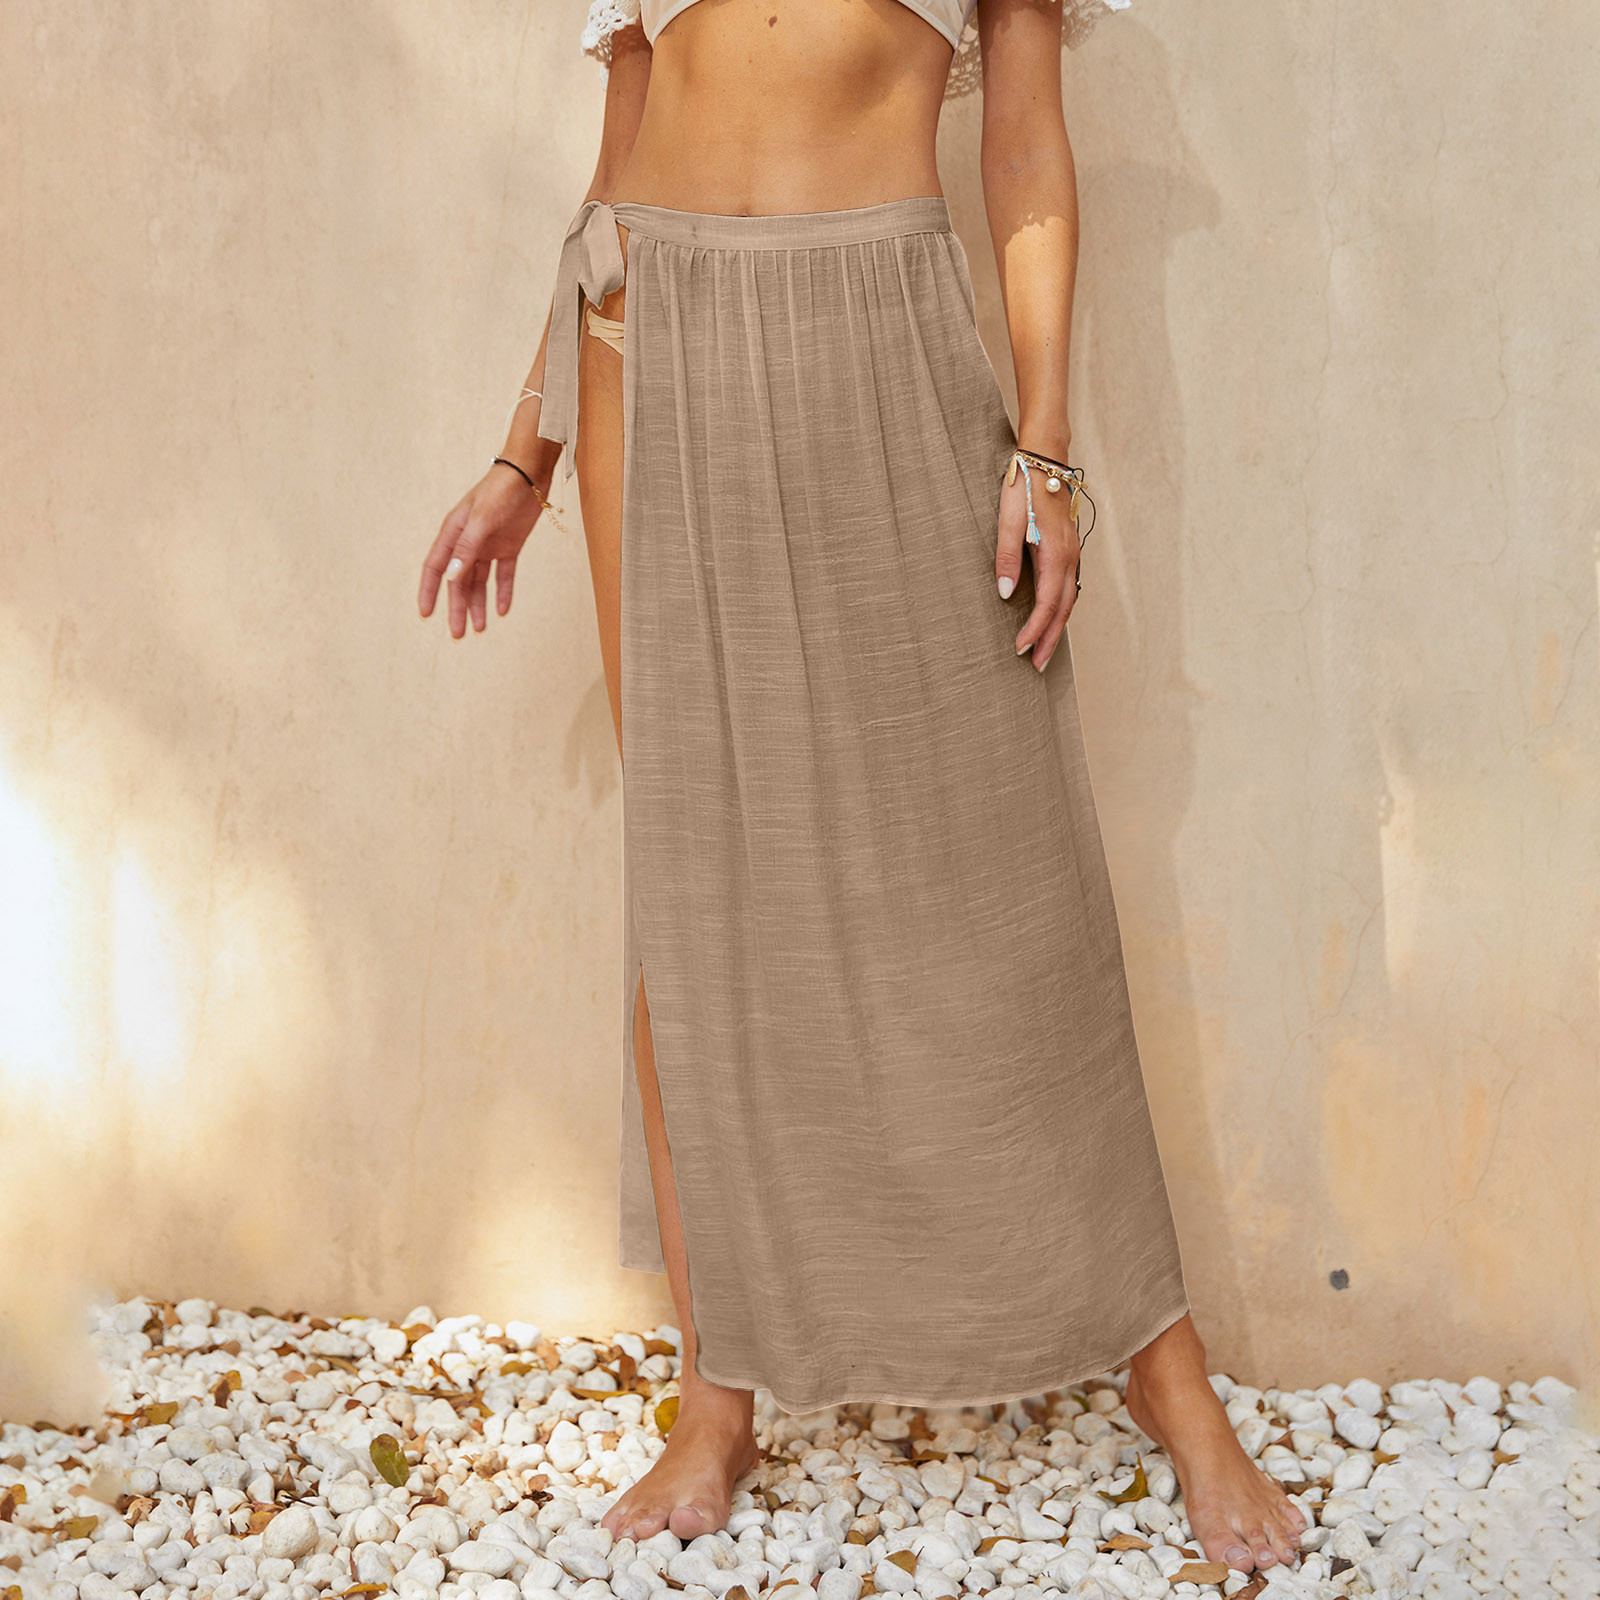 Lilgiuy Women Solid Swimsuit Cover Up Mesh Bikini Swimwear Beach Cover-Ups Wrap Skirt - image 2 of 4